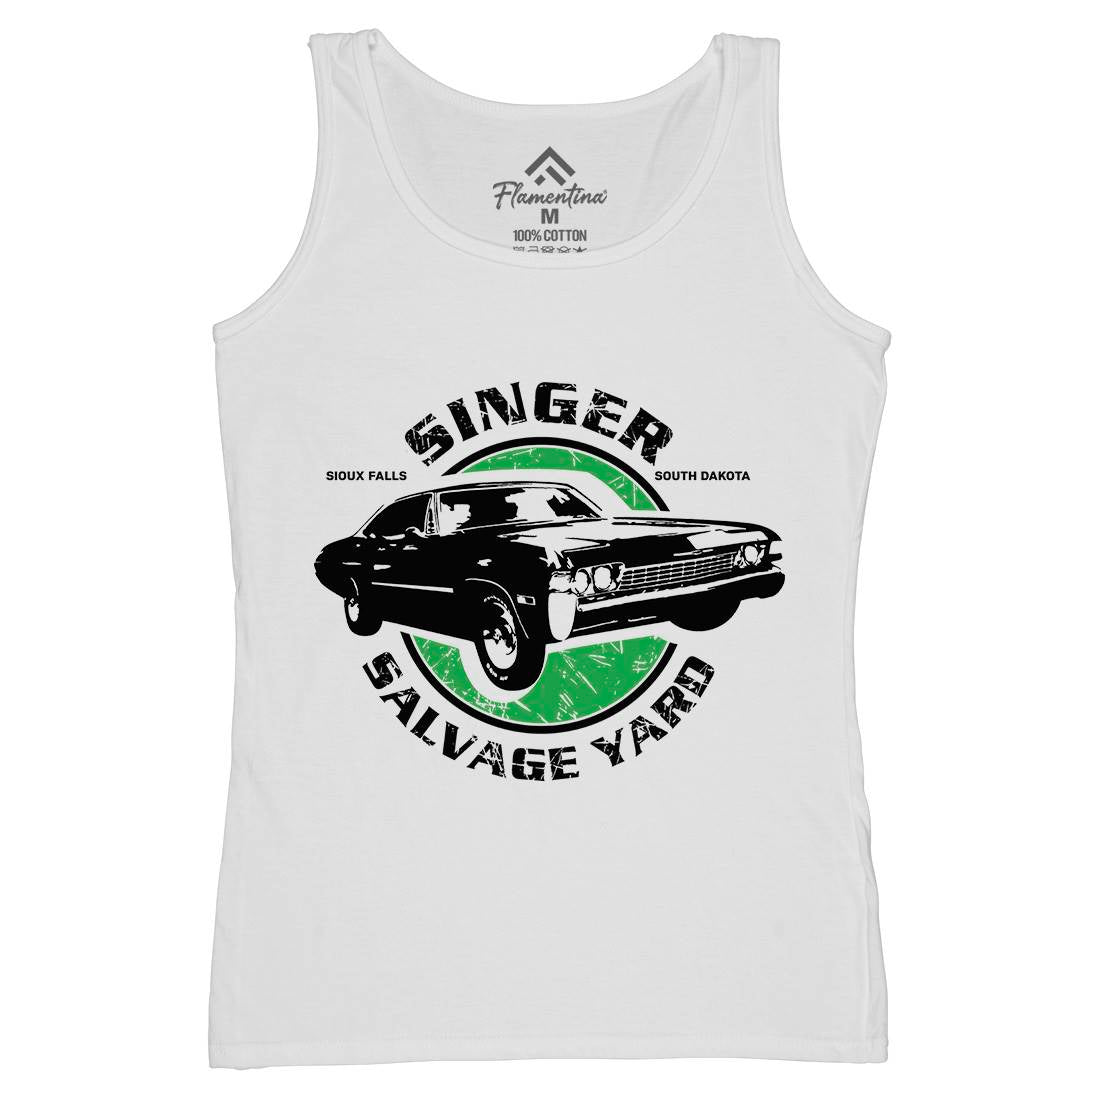 Singer Salvage Yard Womens Organic Tank Top Vest Cars D377